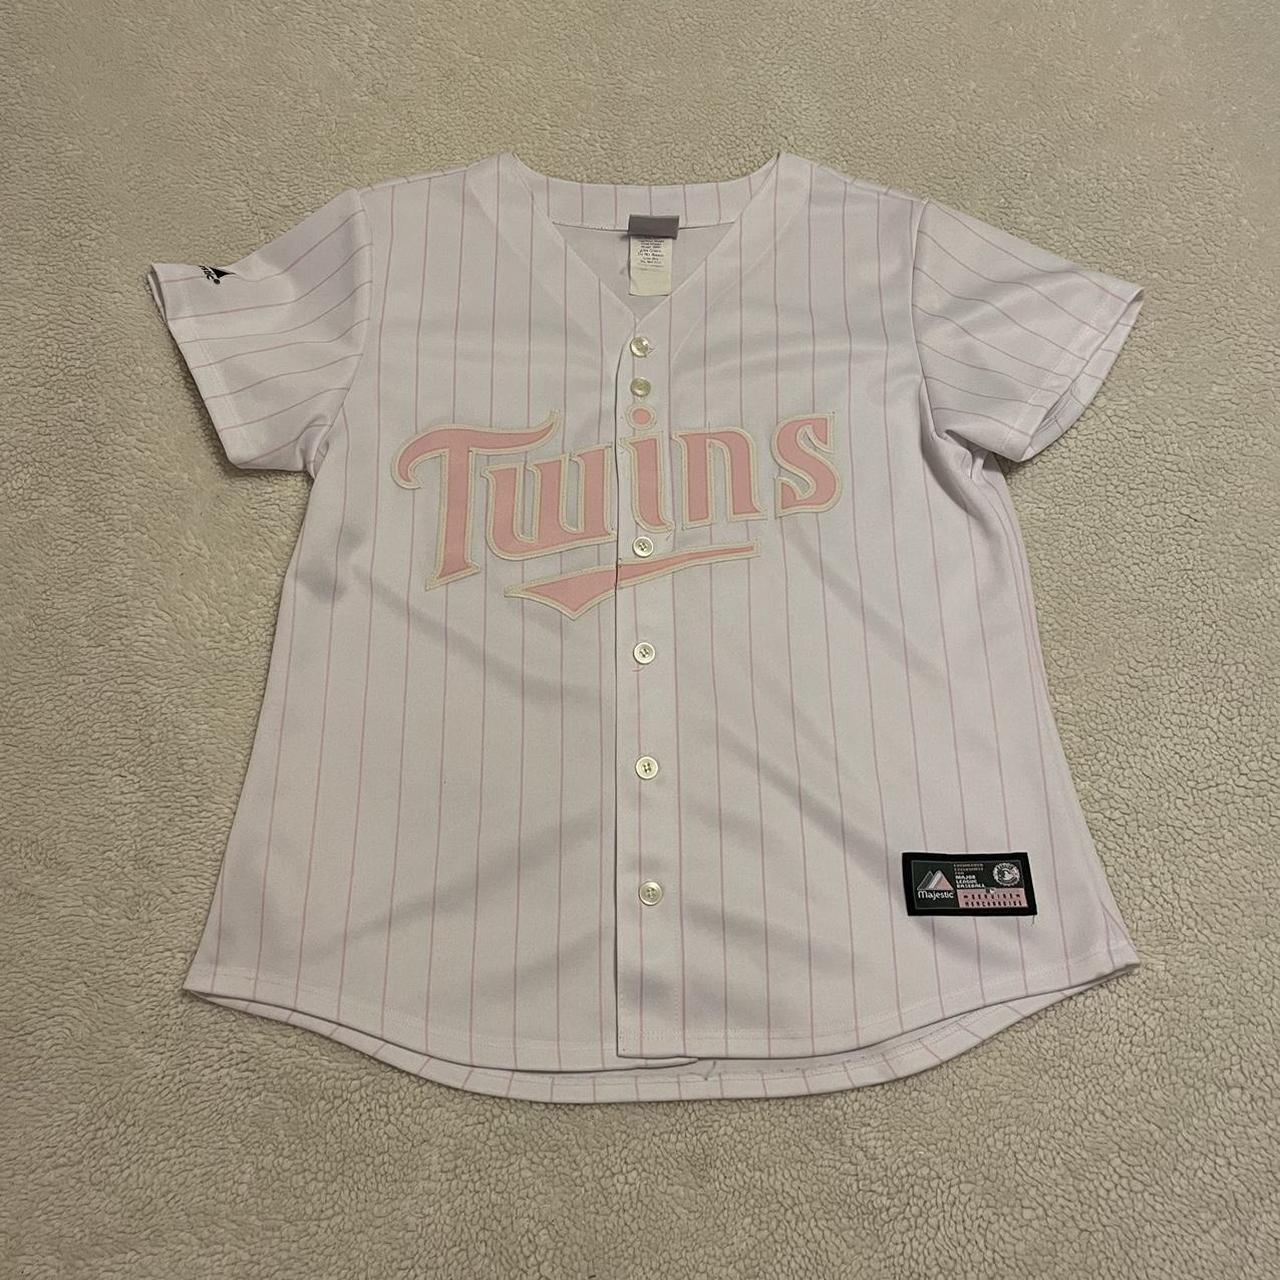 Twins baseball Jersey super dope jersey size medium - Depop